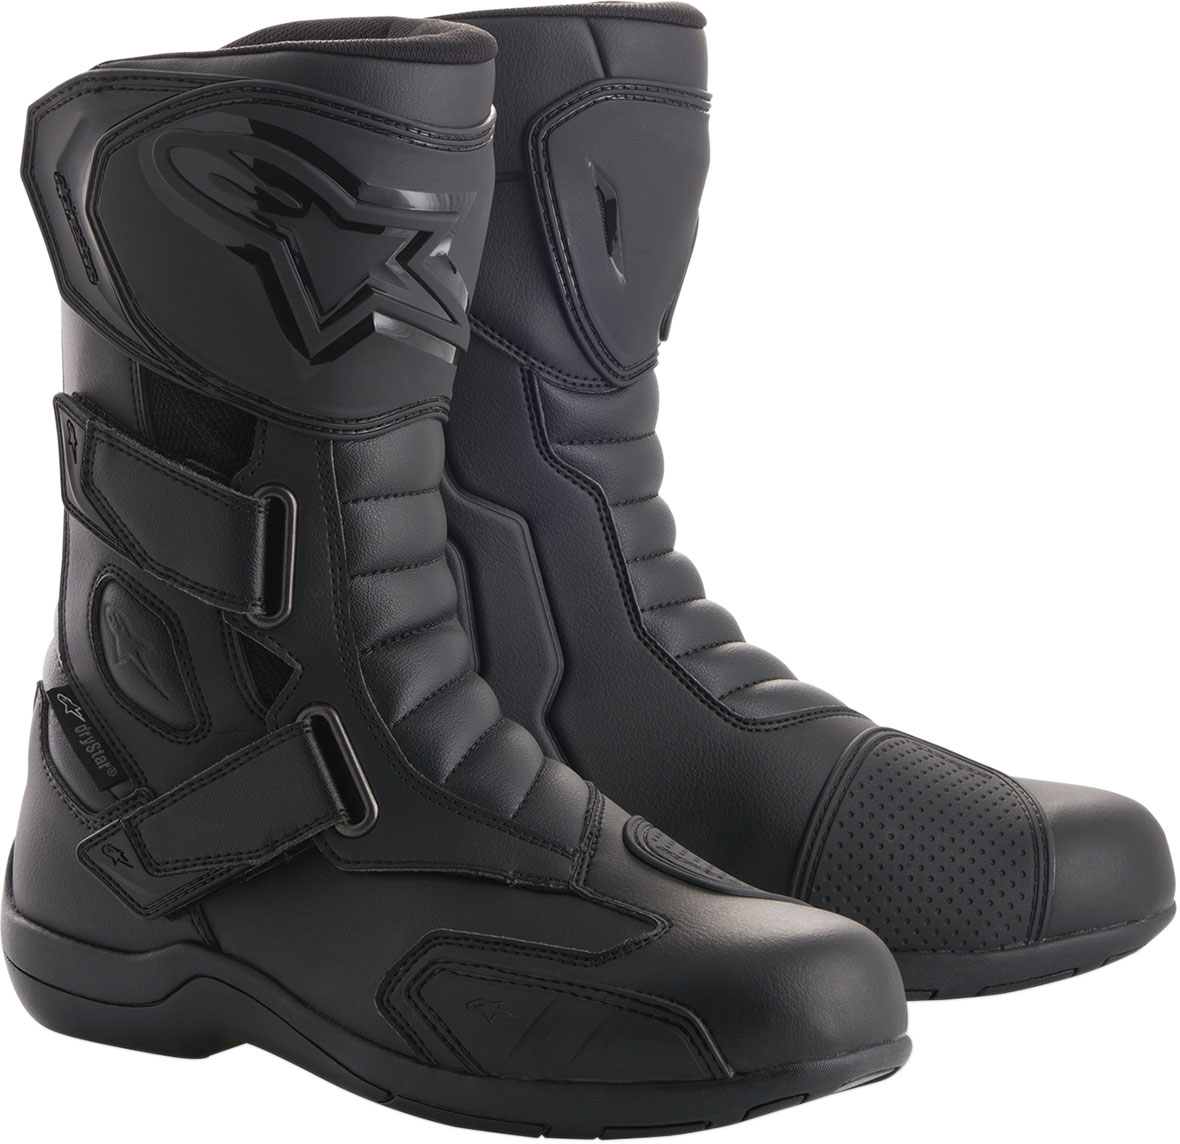 Alpinestars RADON Drystar Leather Adventure-Touring Boots (Black)